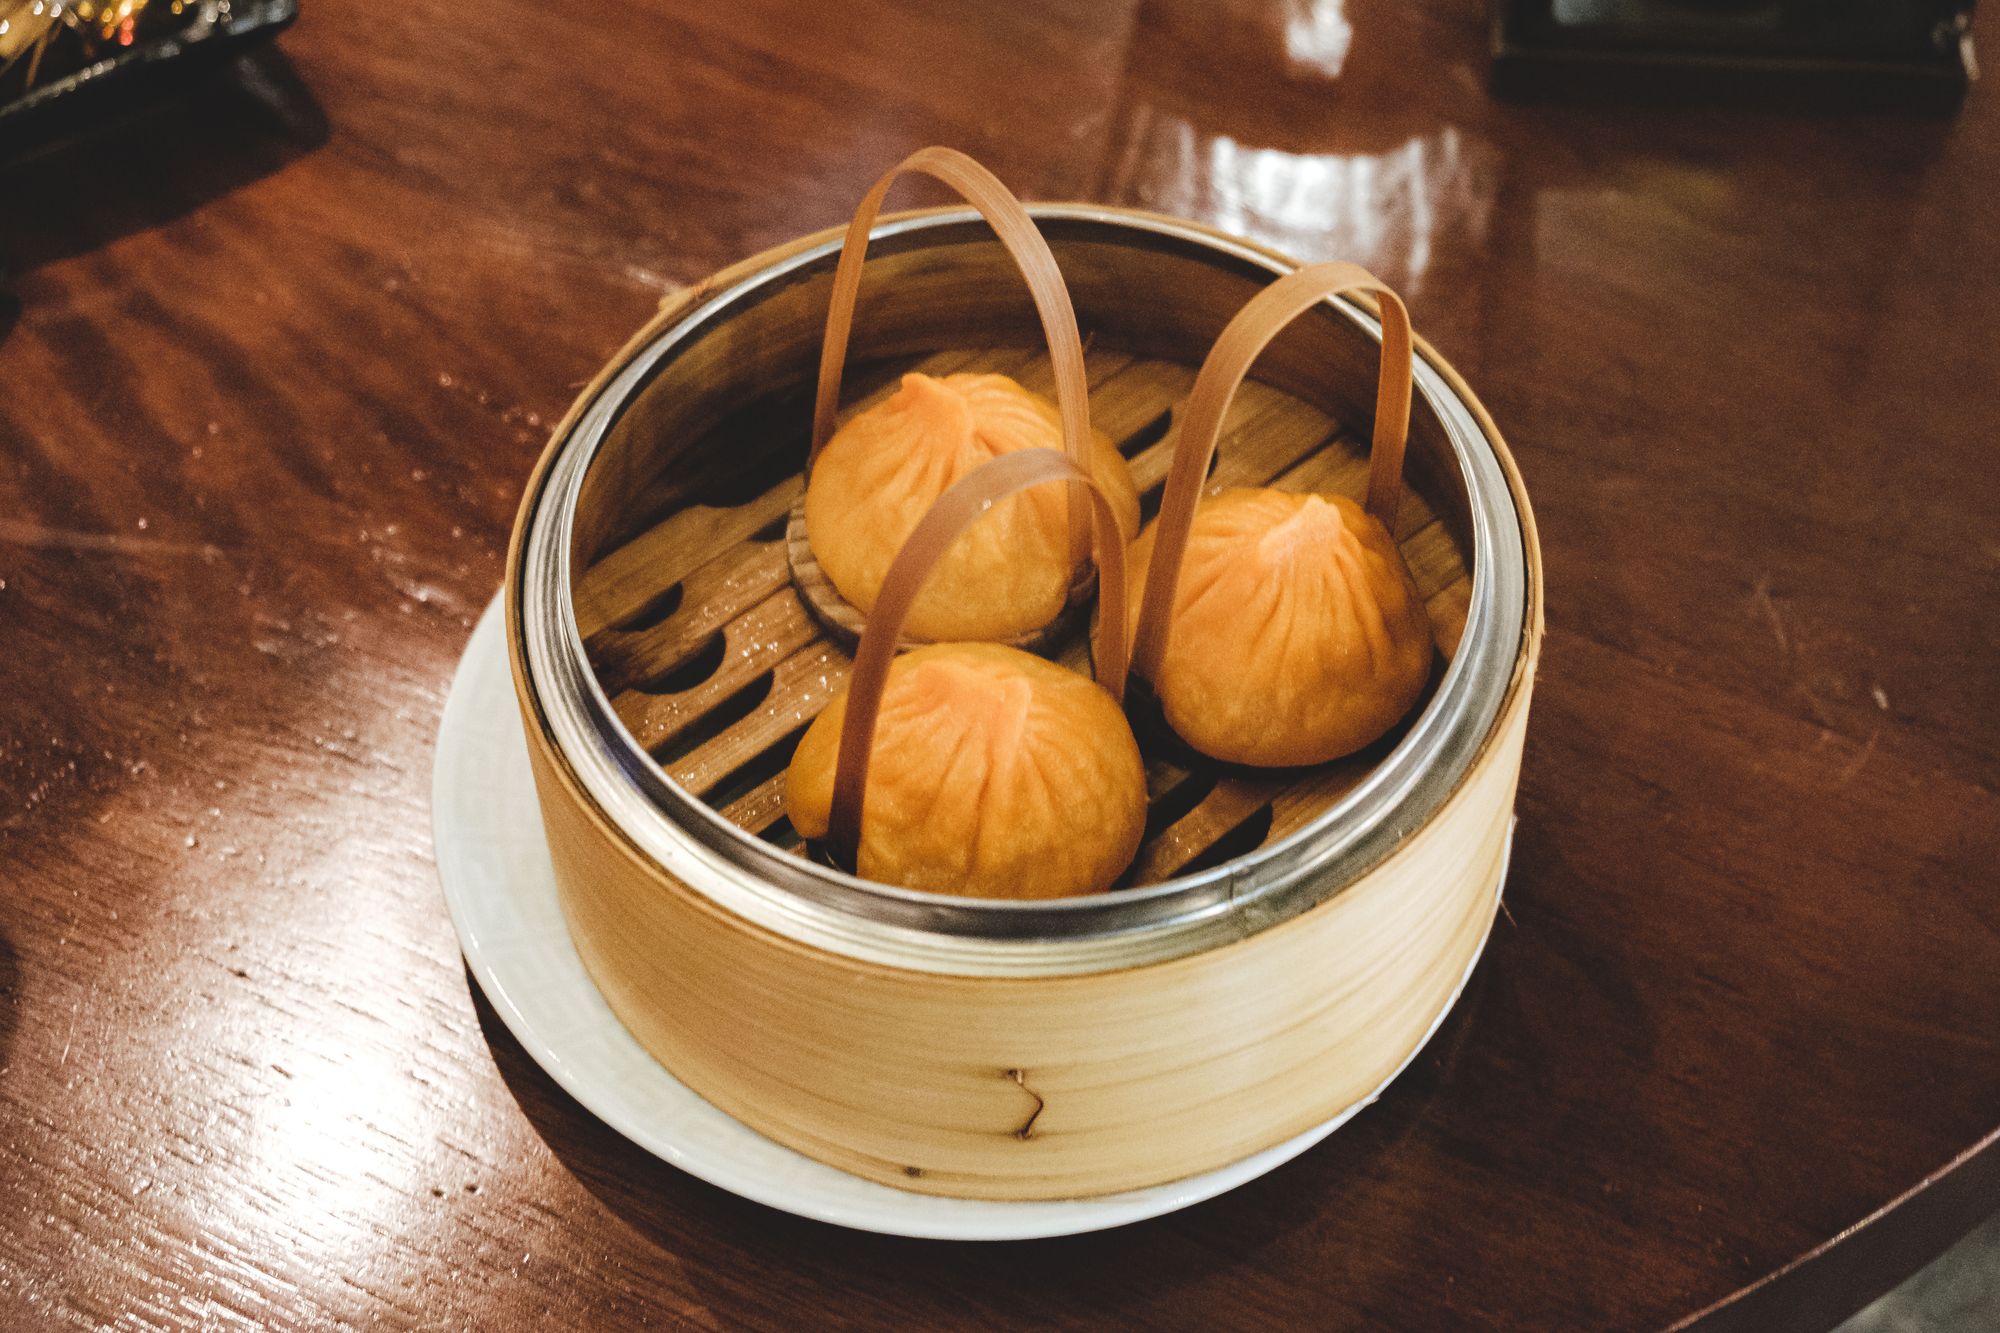 Mott 32 Vancouver – Hot and Sour Iberico Pork Shanghainese Soup Dumplings